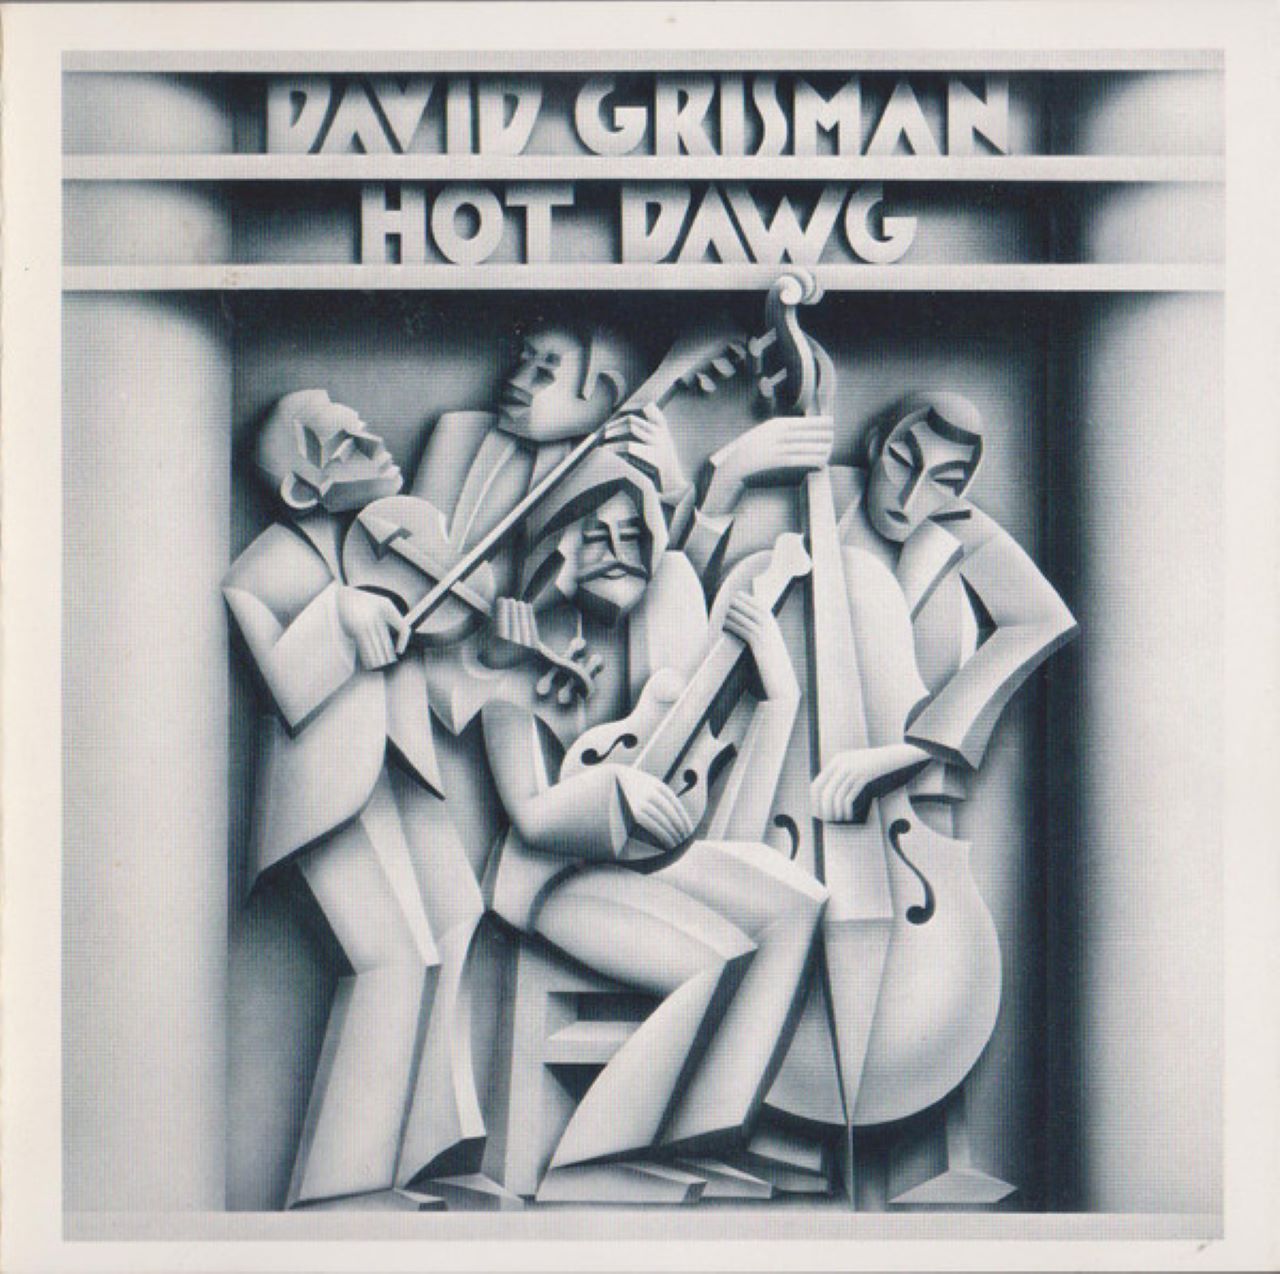 David Grisman - Hot Dawg cover album